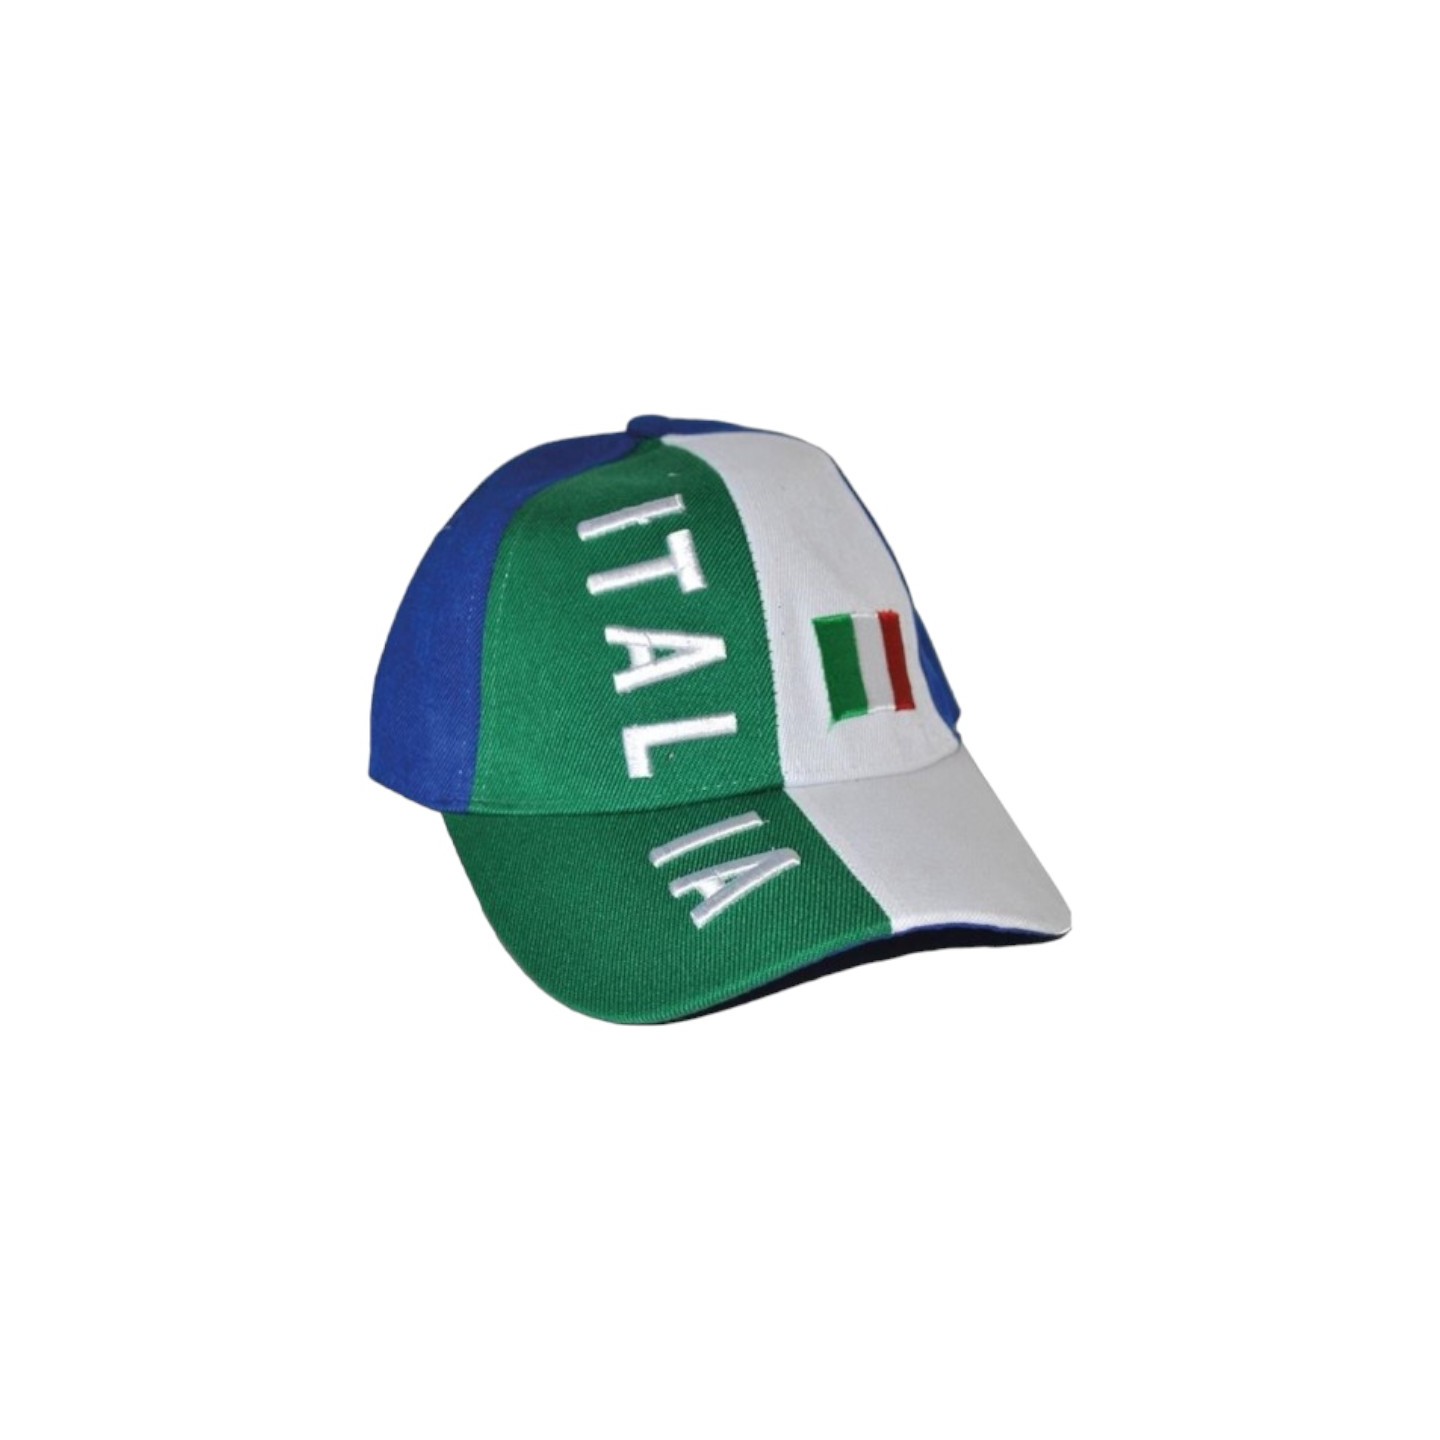 Italiaanse fanartikelen supporters pet Italie